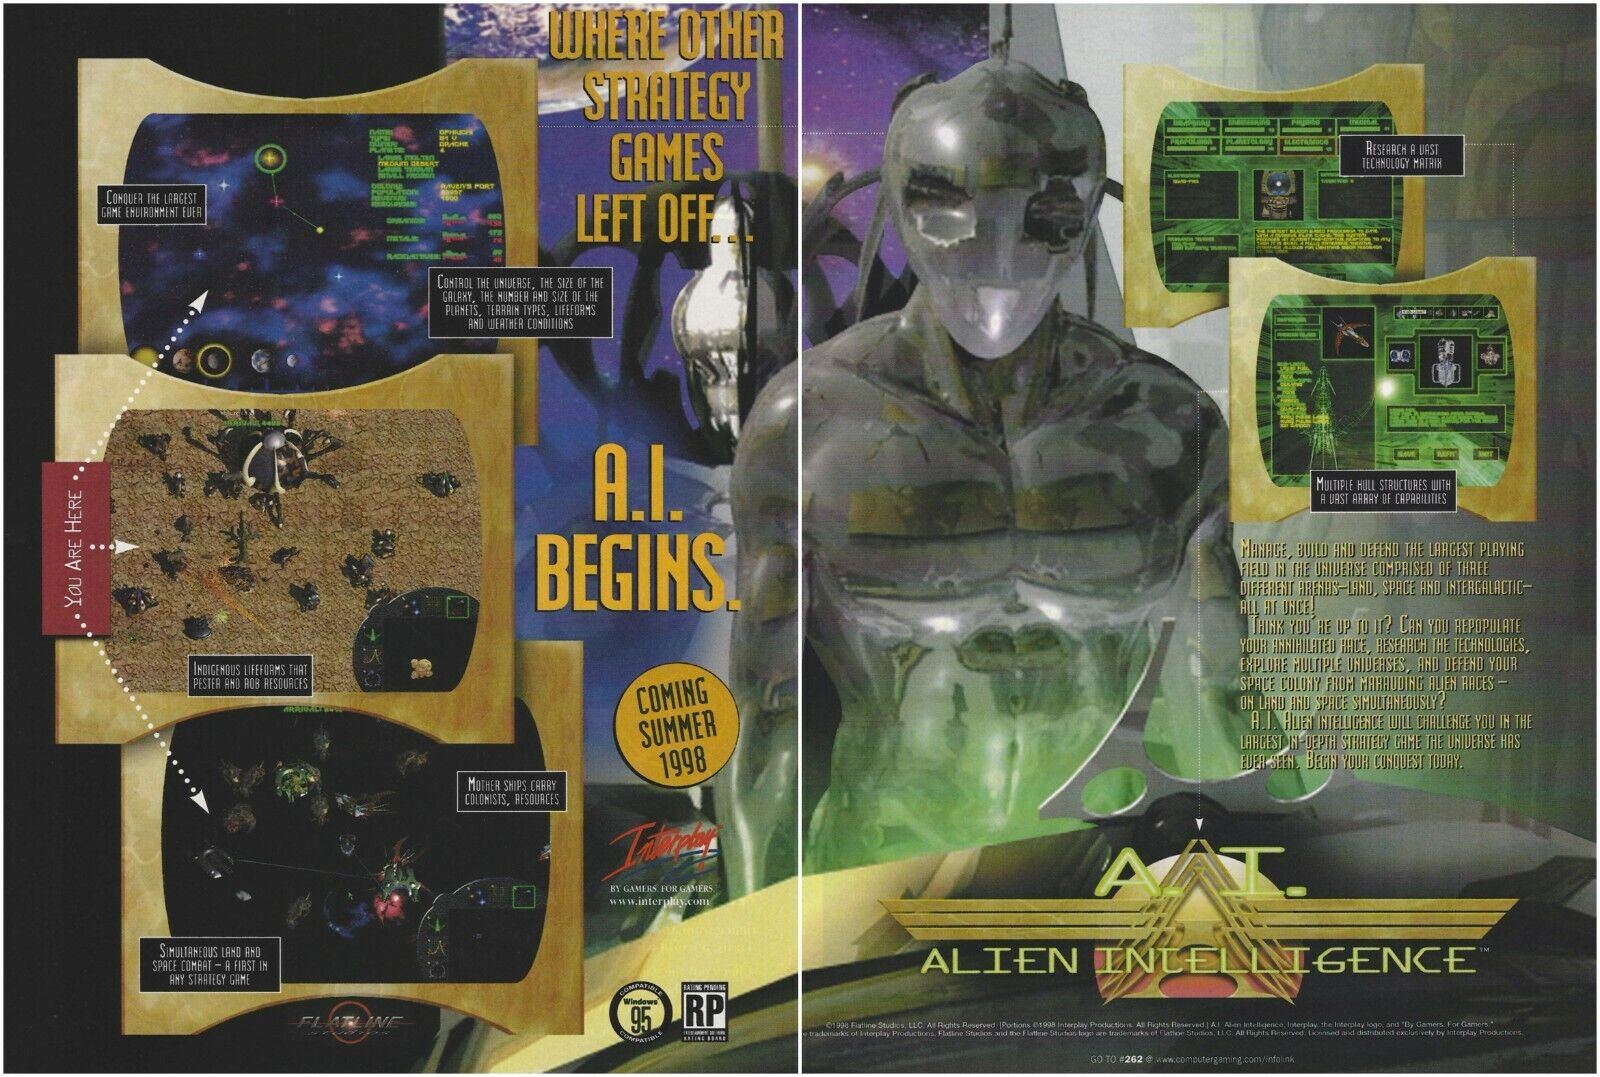 Alien Intelligence Print Ad/Poster Art PC Big Box (A)